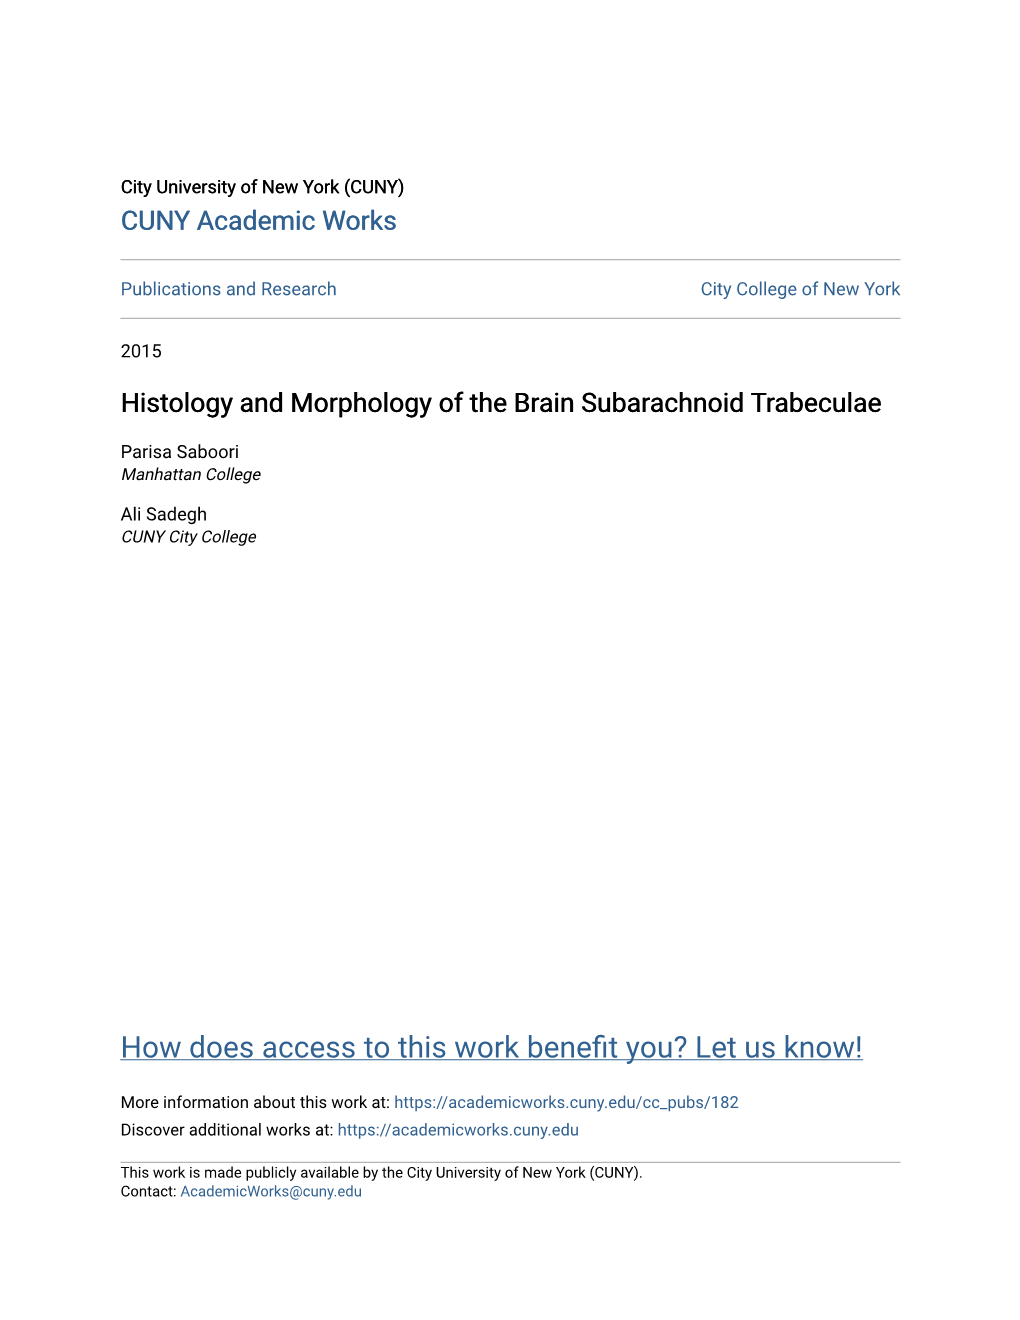 Histology and Morphology of the Brain Subarachnoid Trabeculae